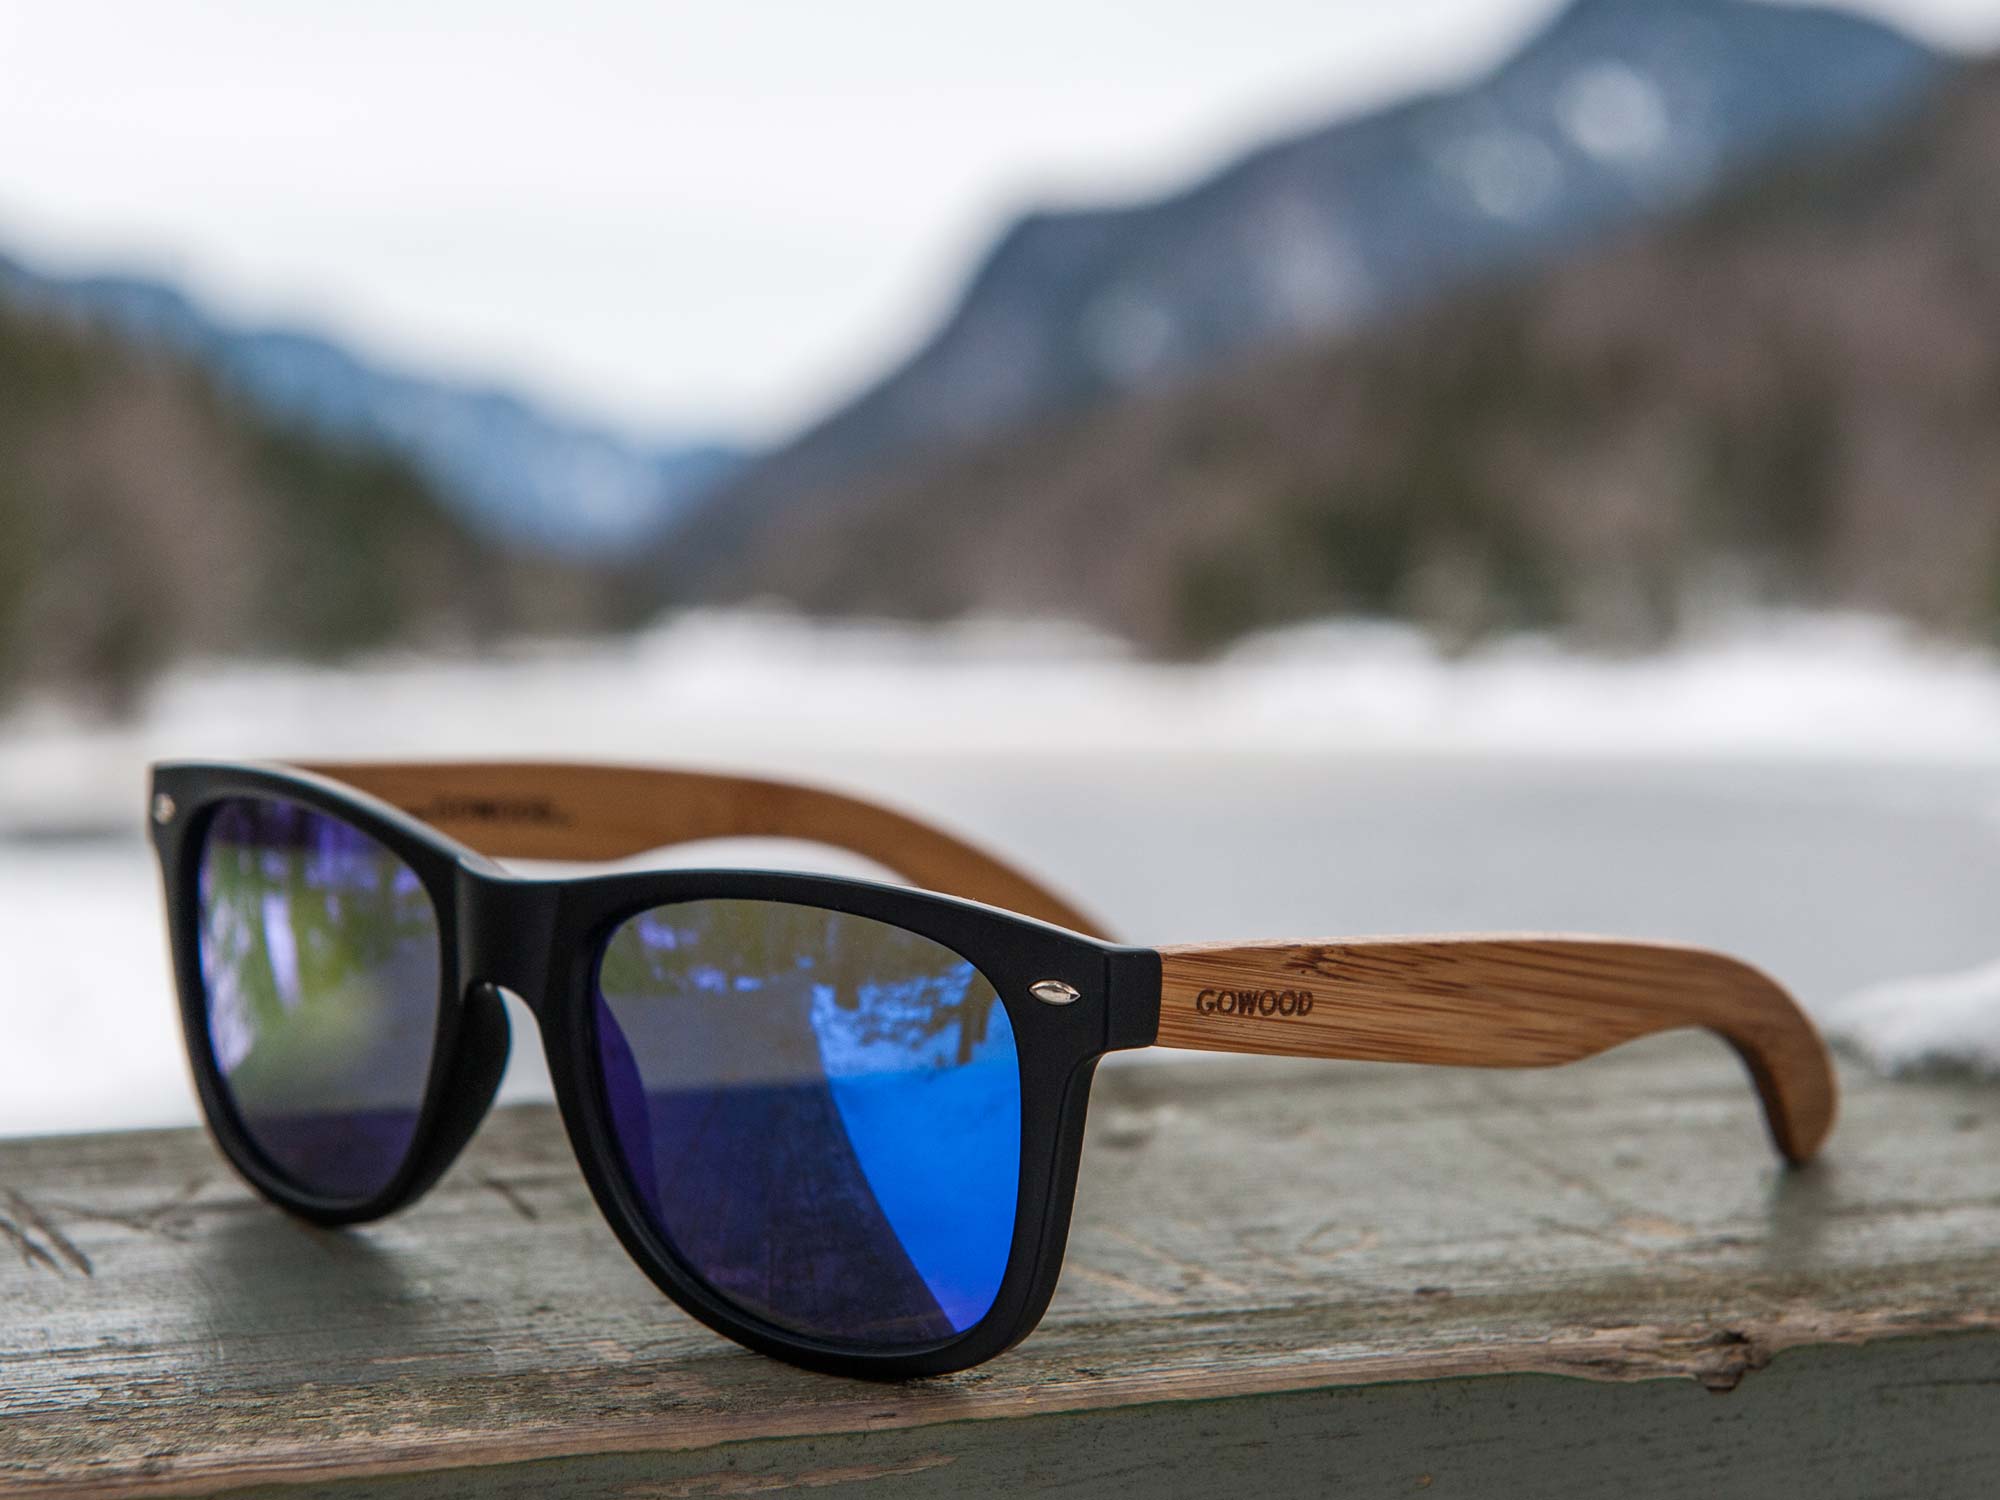 bamboo wood sunglasses wayfarer style with blue mirrored polarized lenses